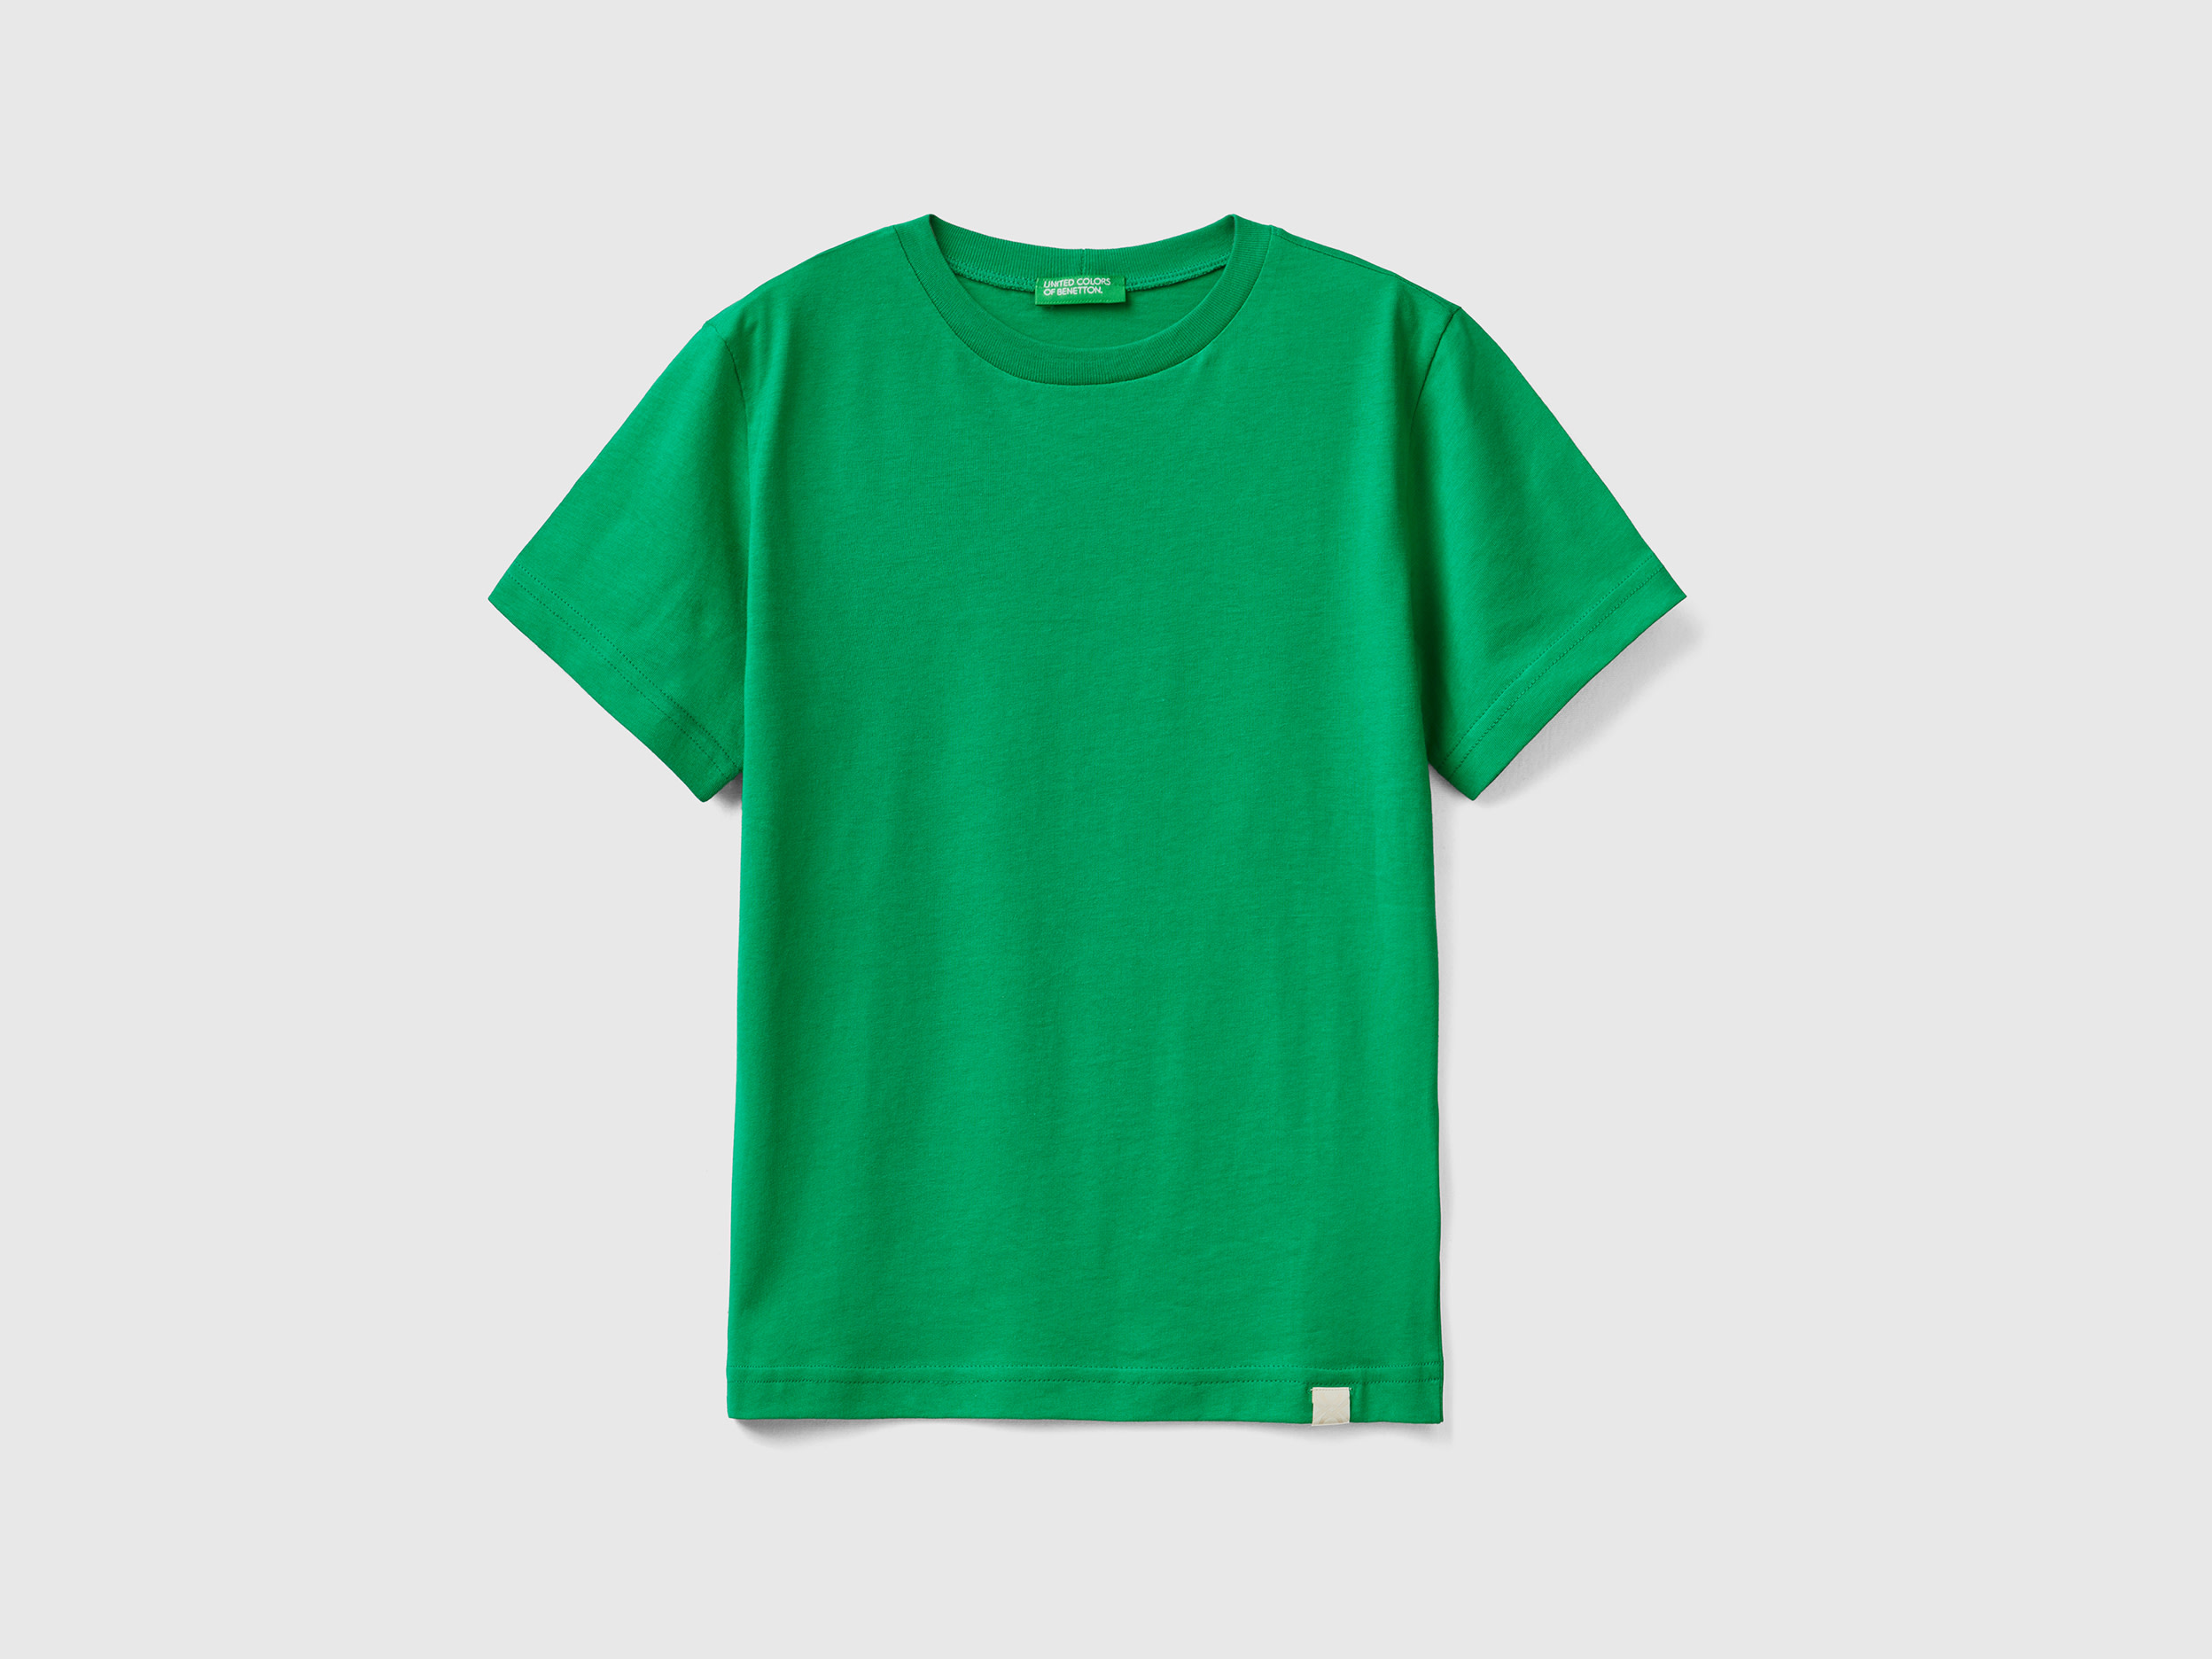 Benetton, Organic Cotton T-shirt, size 3XL, Green, Kids